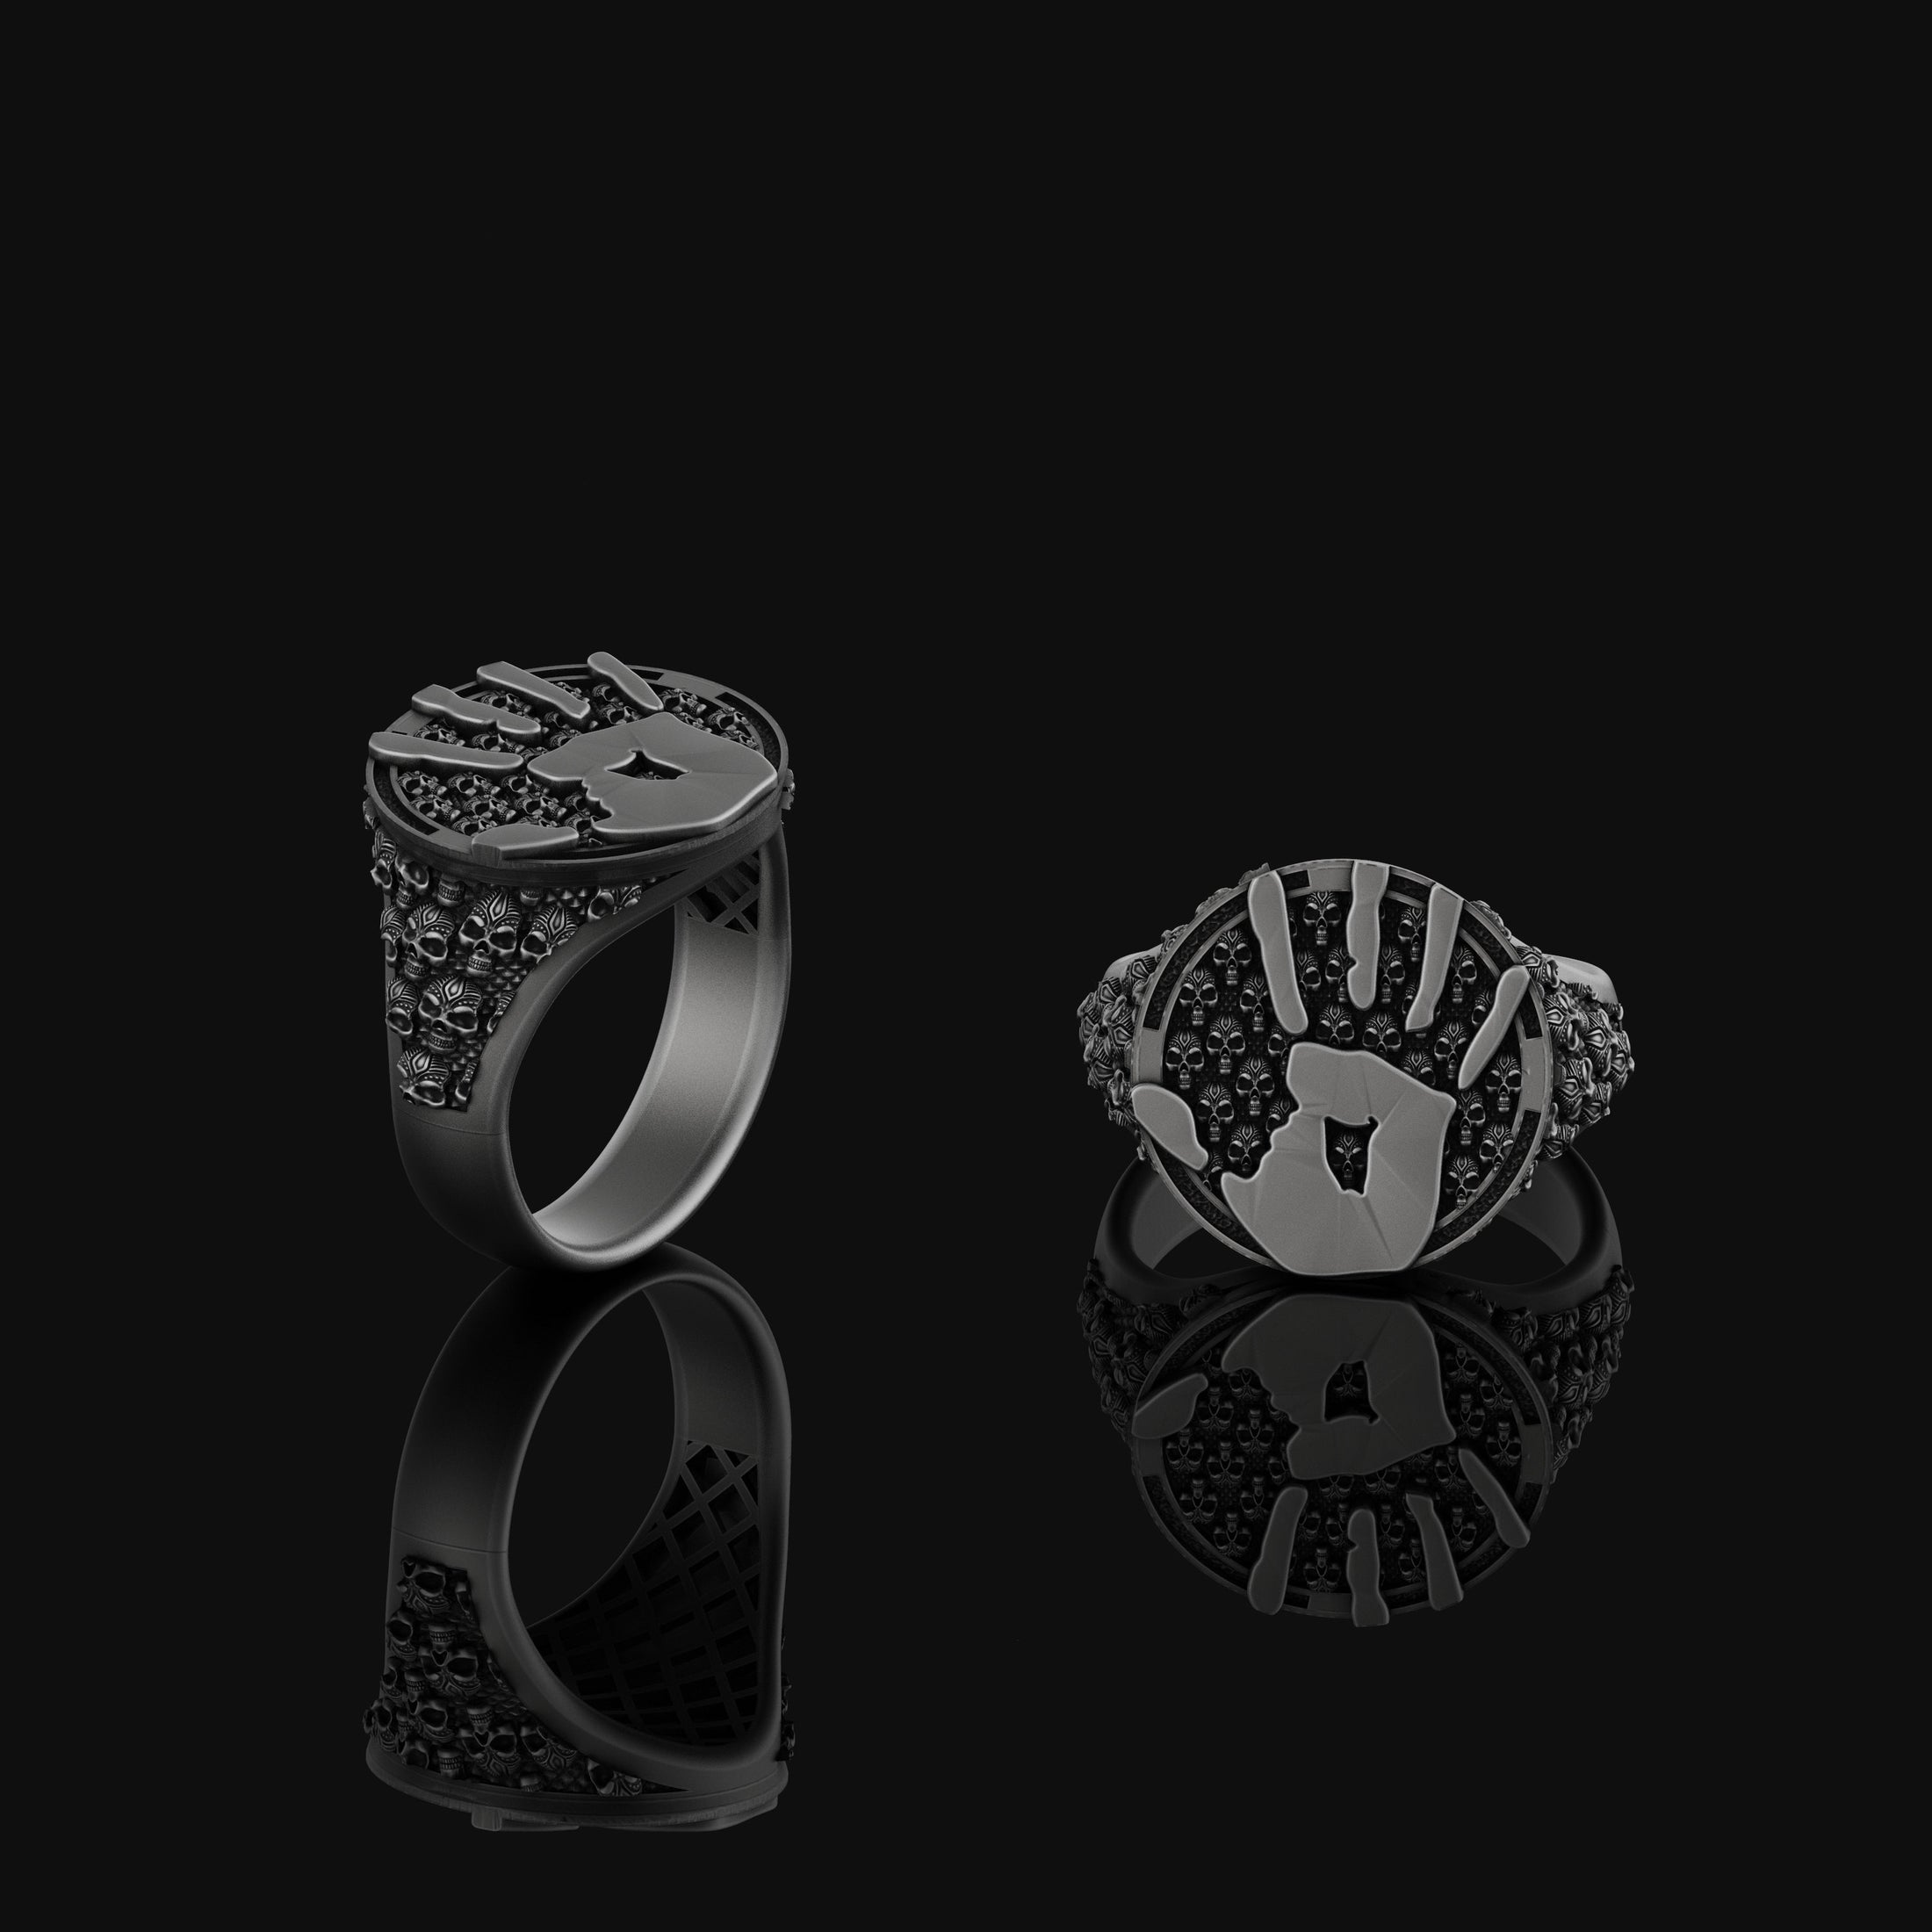 Silver Skyrim Dark Brotherhood Ring, Thieves Guild Emblem, 'We Know' Inscription, Elder Scrolls Inspired Skulls Band